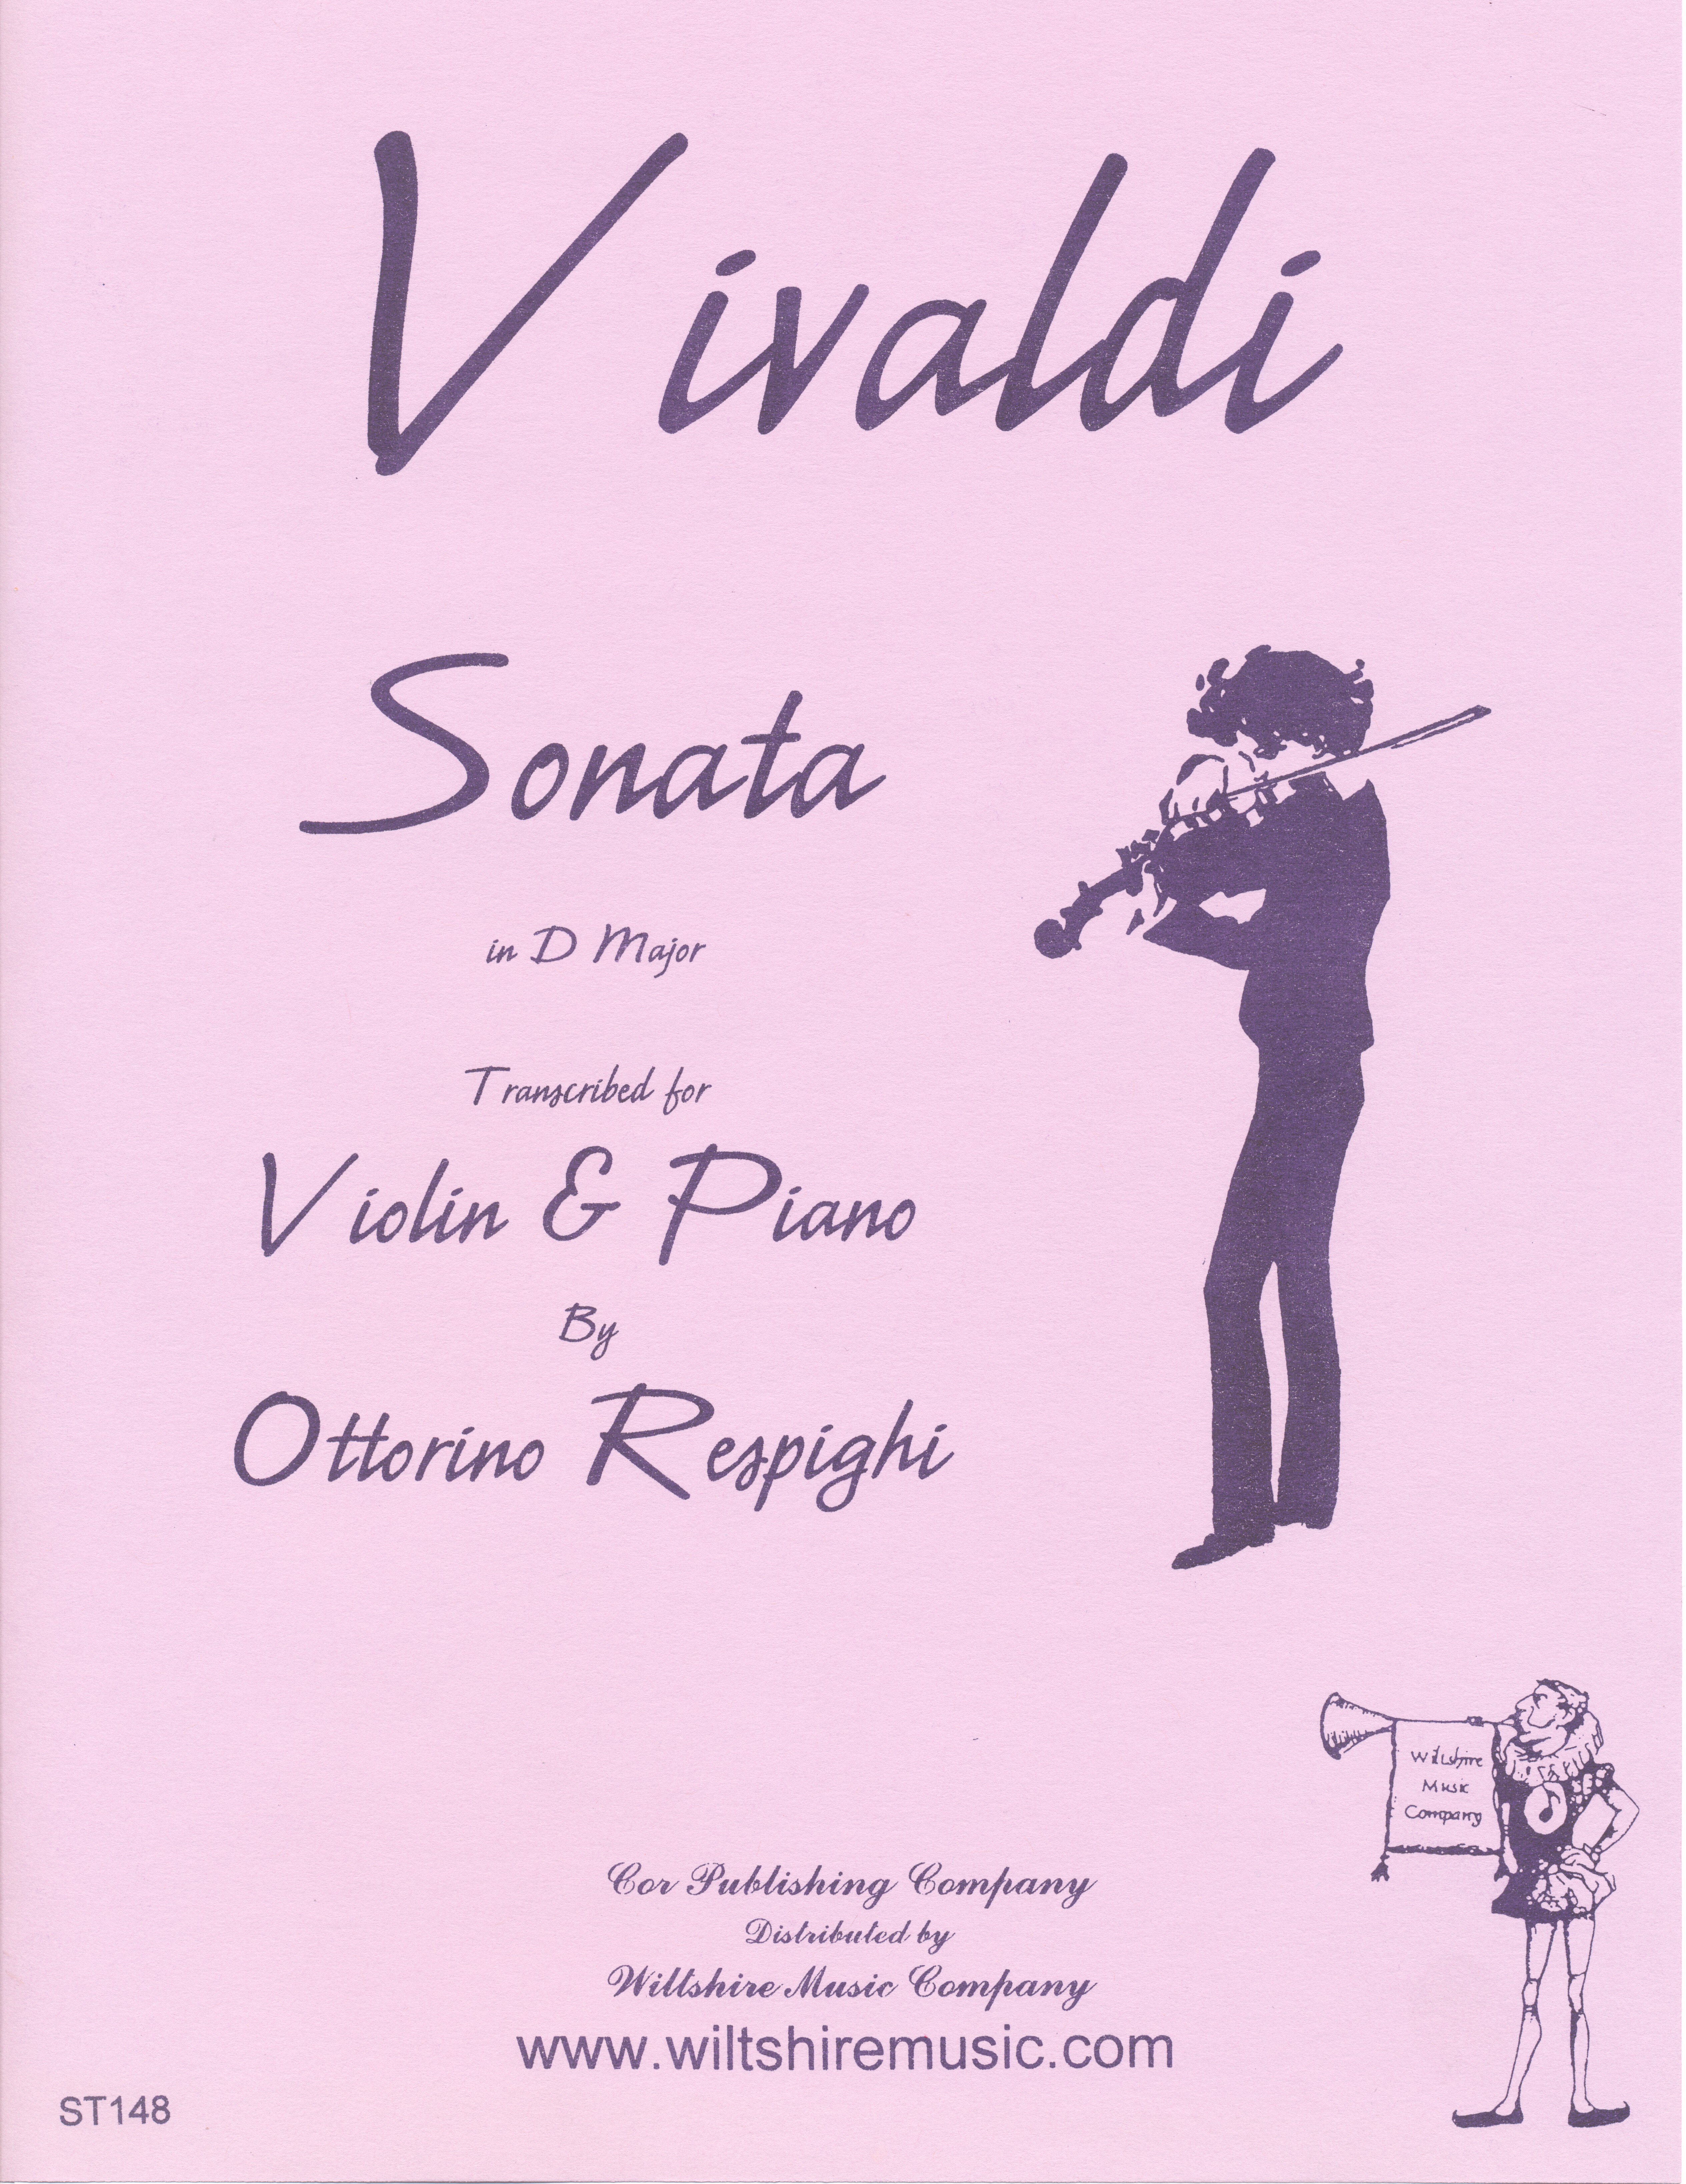 Sonata in D Major, Vivaldi, violin & piano